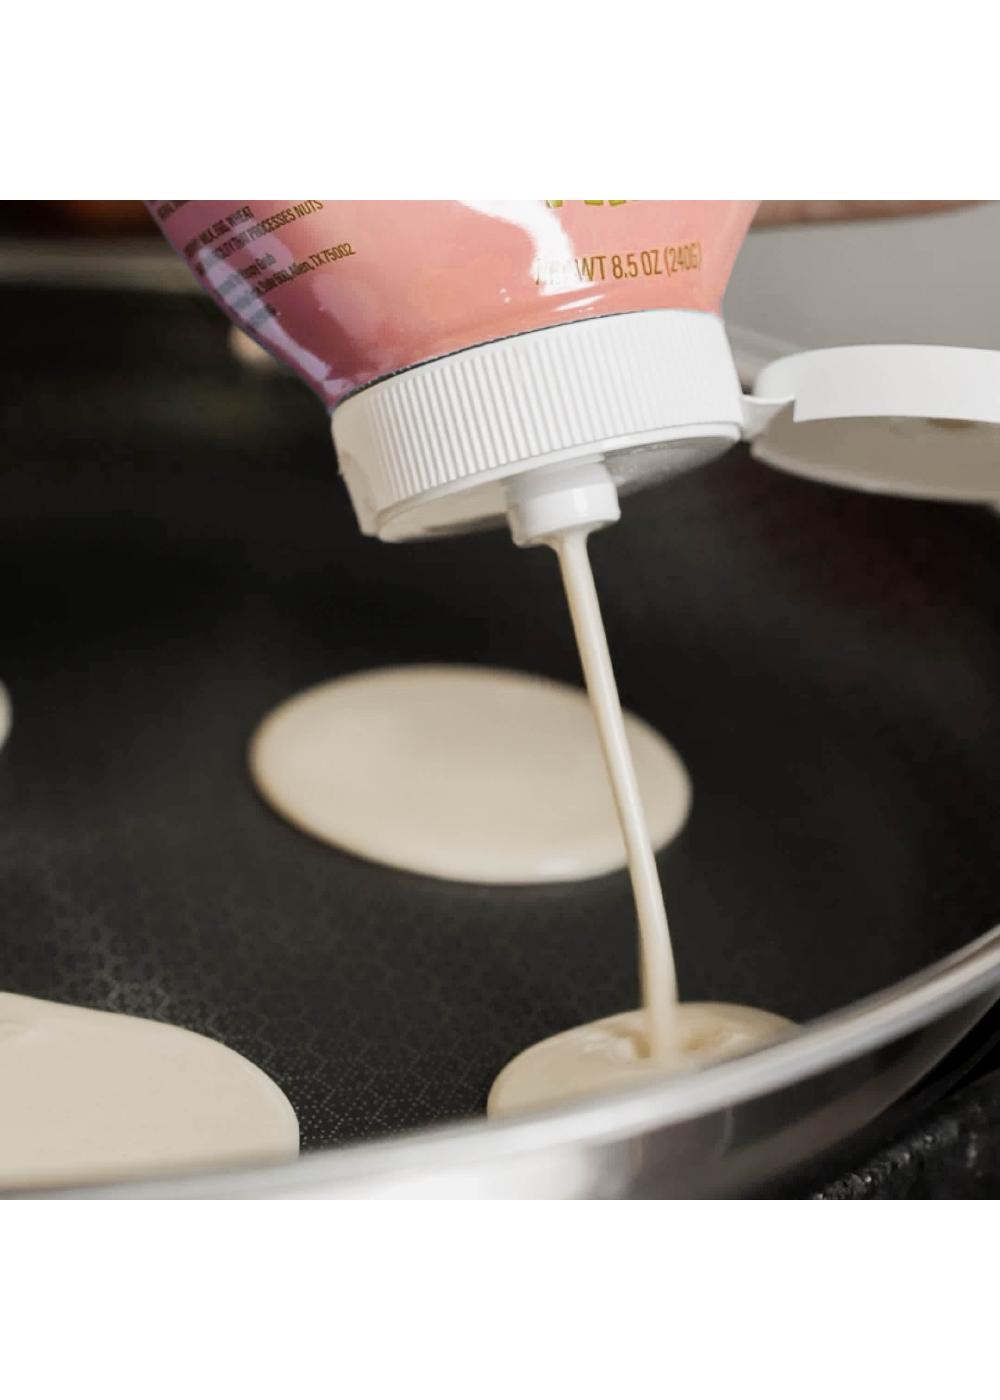 Happy Grub Squeezable Instant Pancake Mix Apple Cinnamon; image 2 of 5